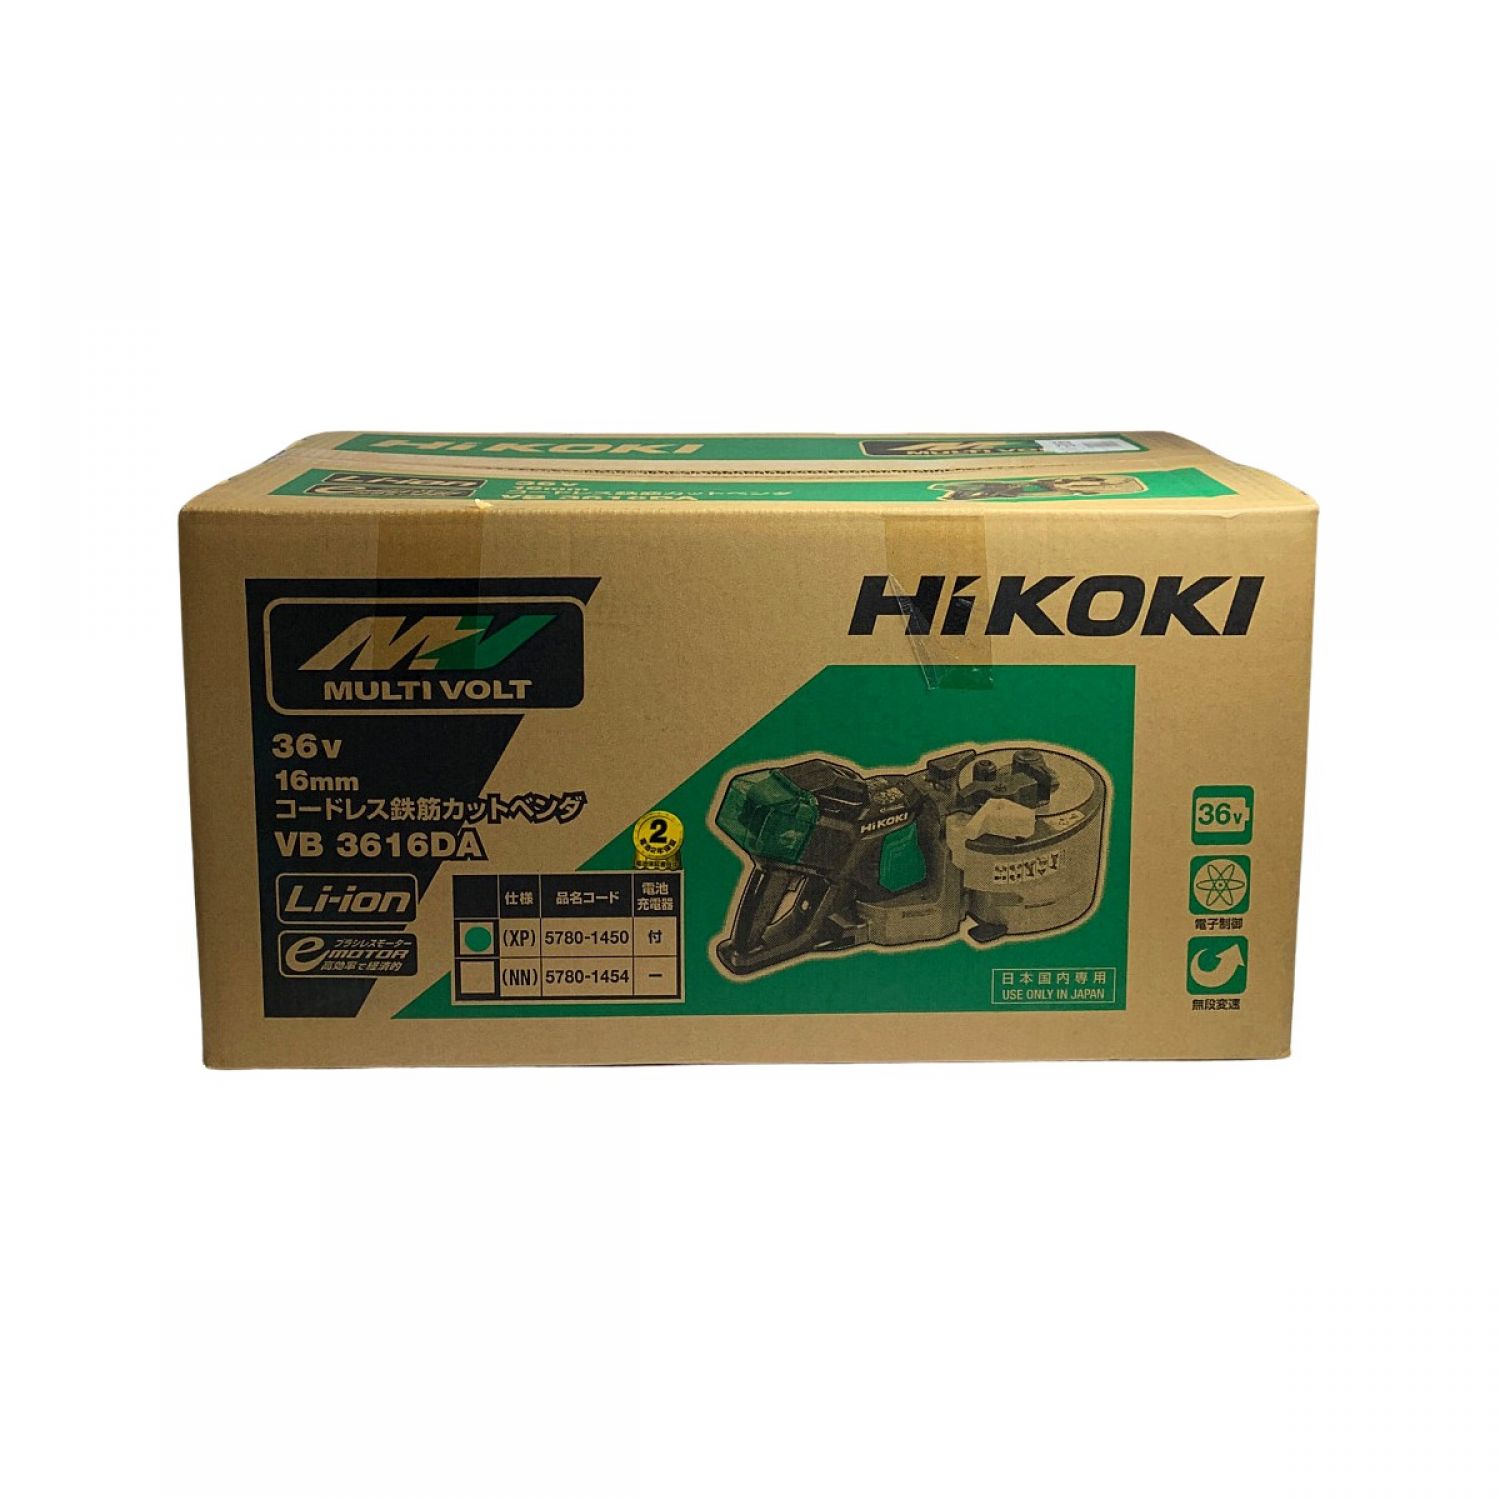 HiKOKI ハイコーキ 36V 16mm コードレス鉄筋カットベンダ VB3616DA 【未開封品】 Sランク